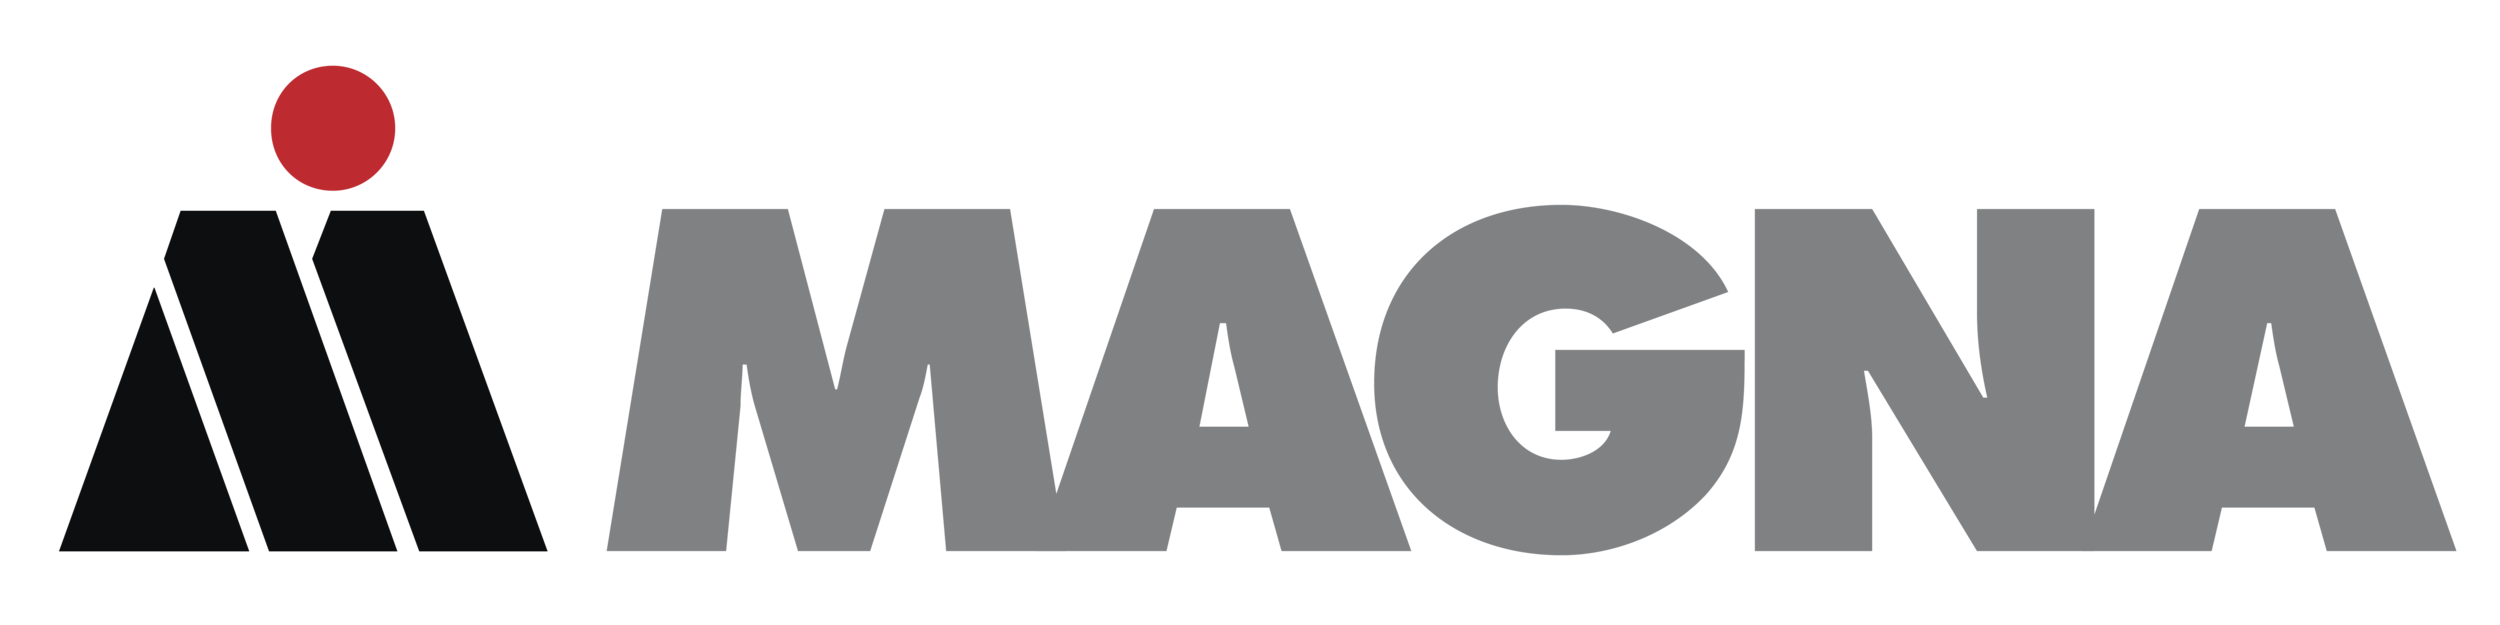 Magna logo.png